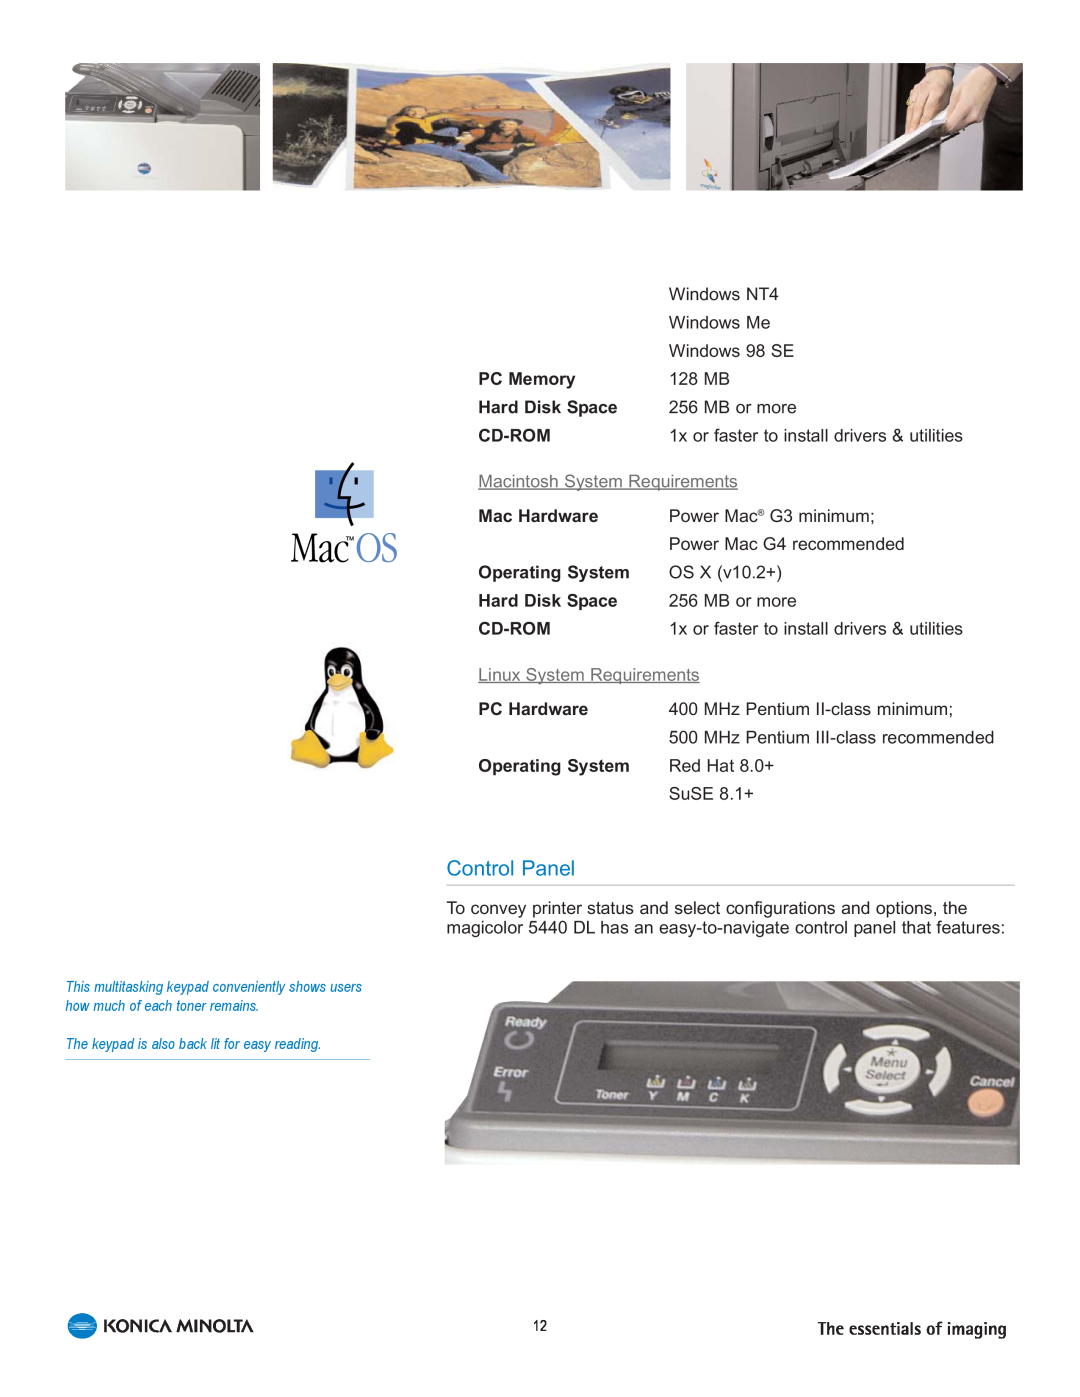 Konica Minolta 5440 DL Control Panel, PC Memory, Hard Disk Space, Cd-Rom, Macintosh System Requirements, Mac Hardware 